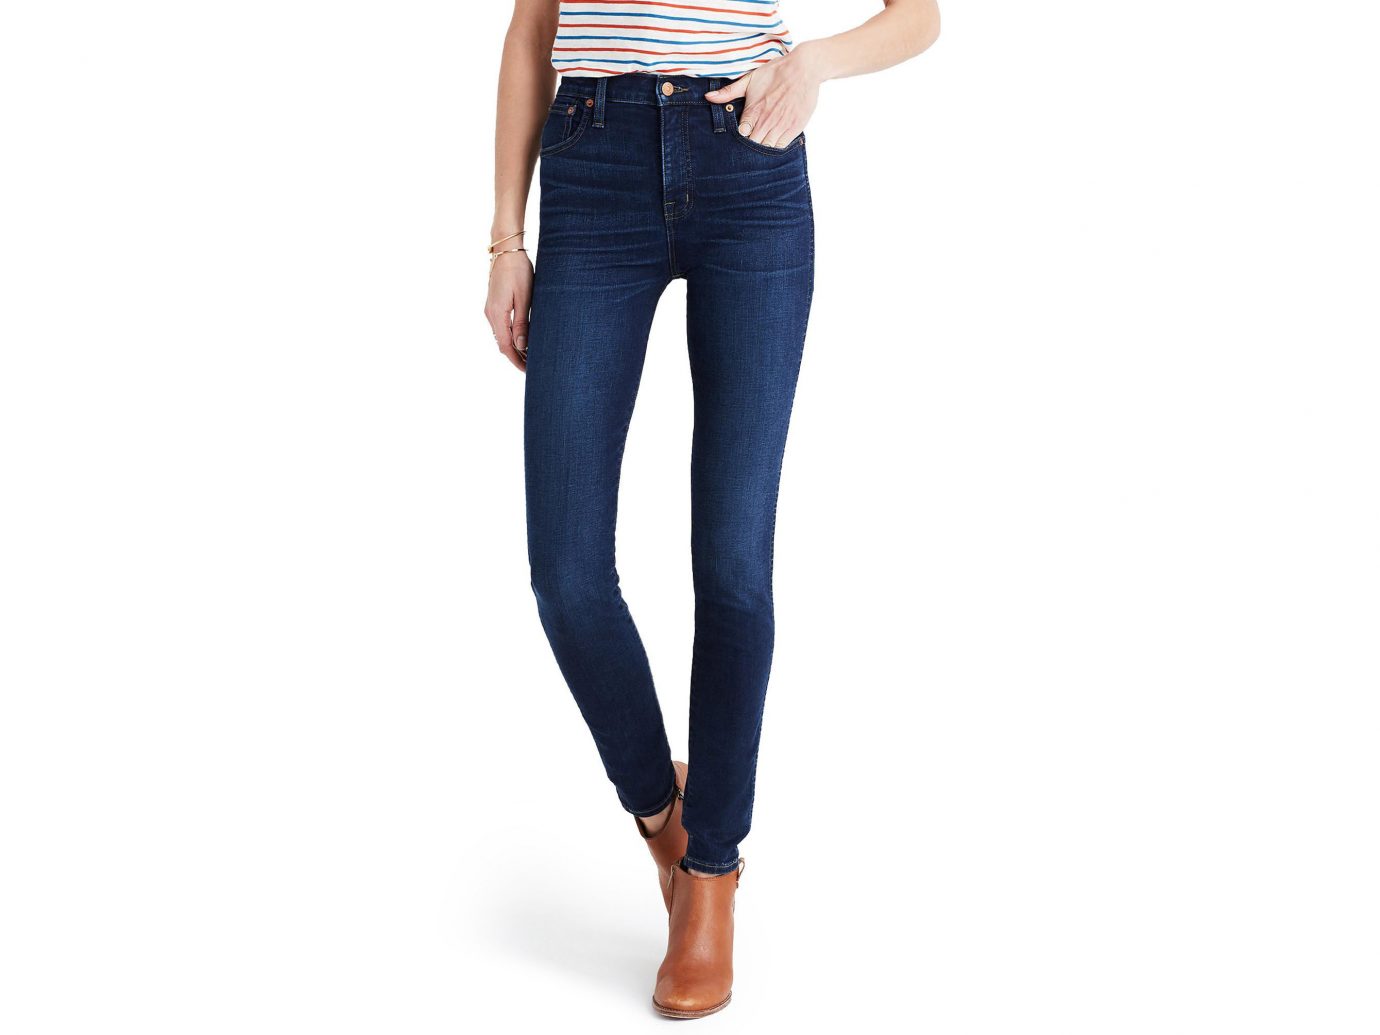 France Style + Design Travel Shop clothing jeans denim waist trouser electric blue joint trousers leggings abdomen trunk pocket